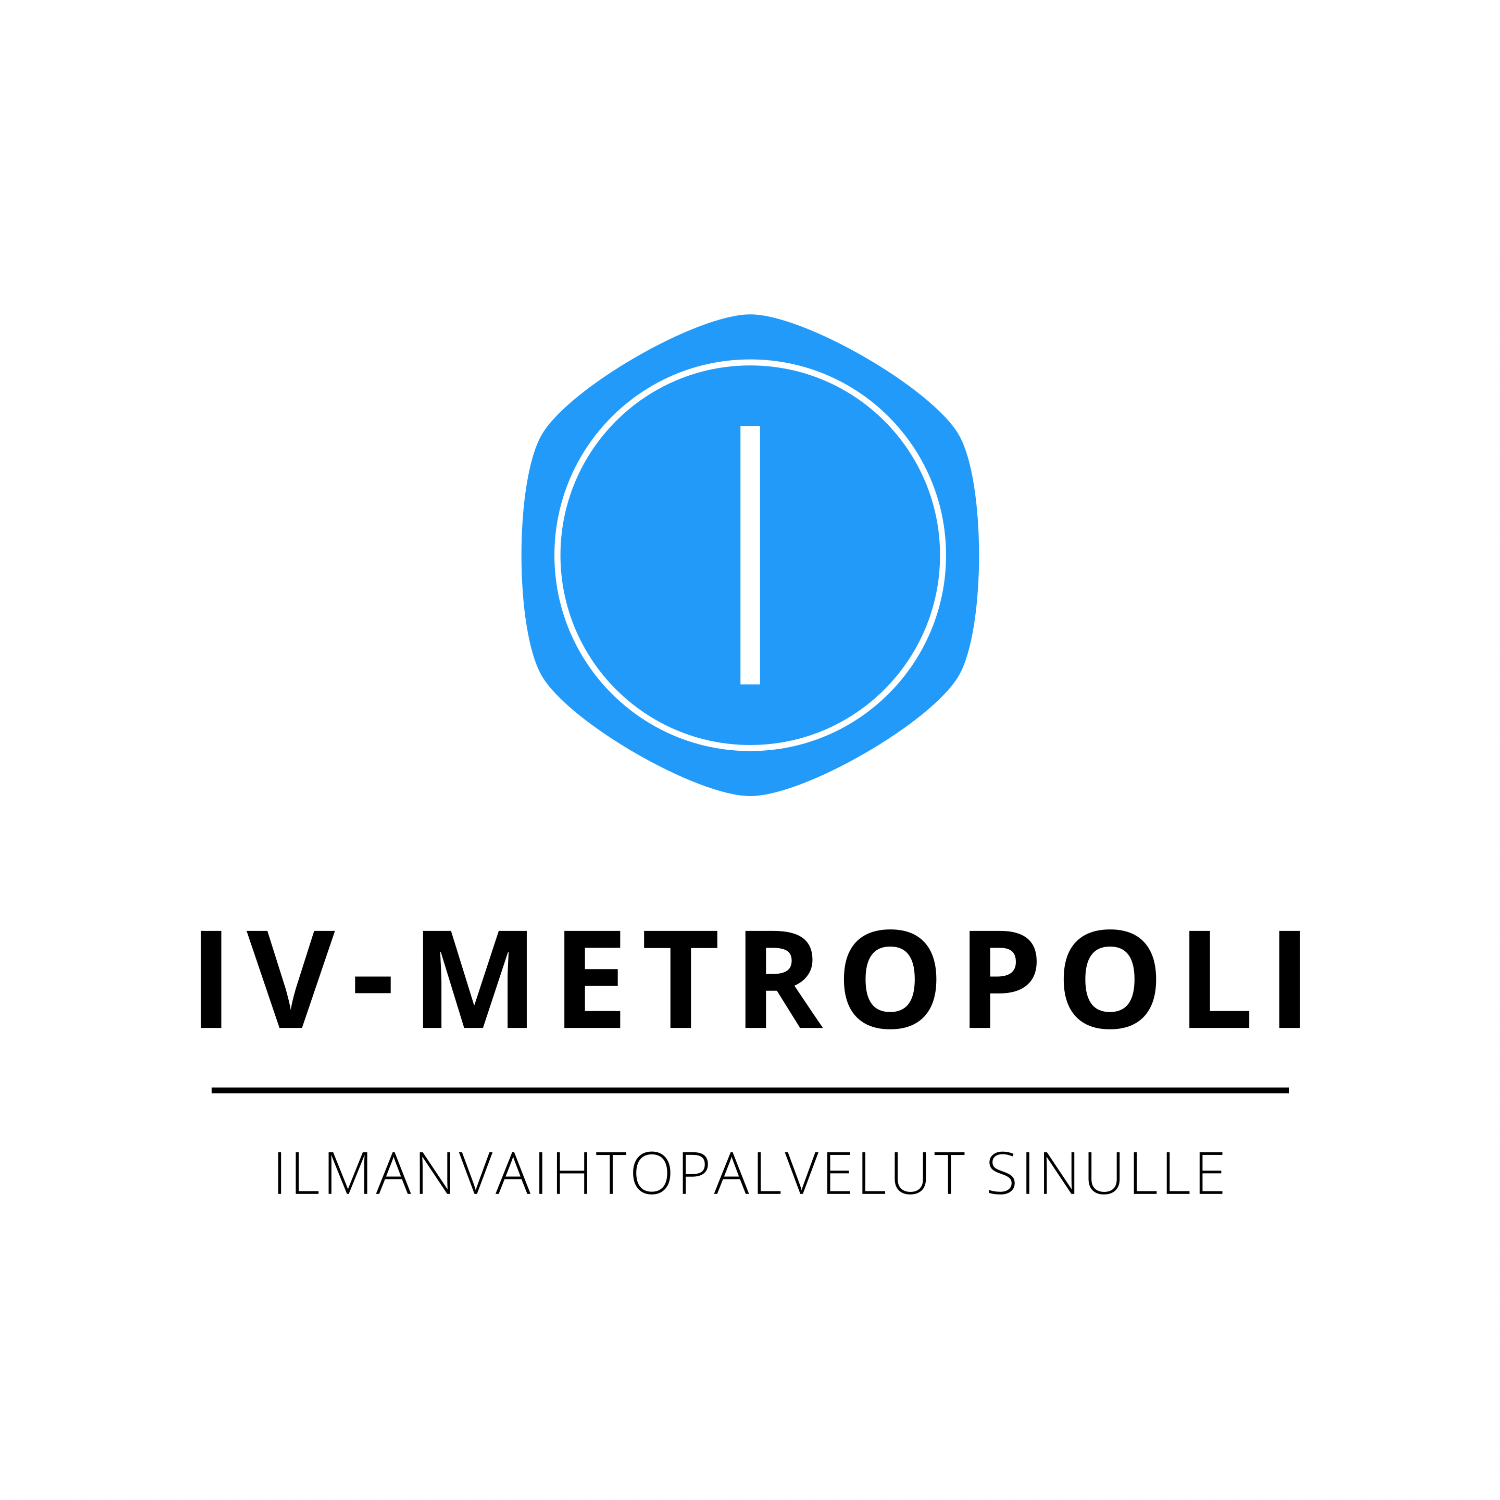 IV-METROPOLI on nyt ILMANVAIHTOPALVELU.COM